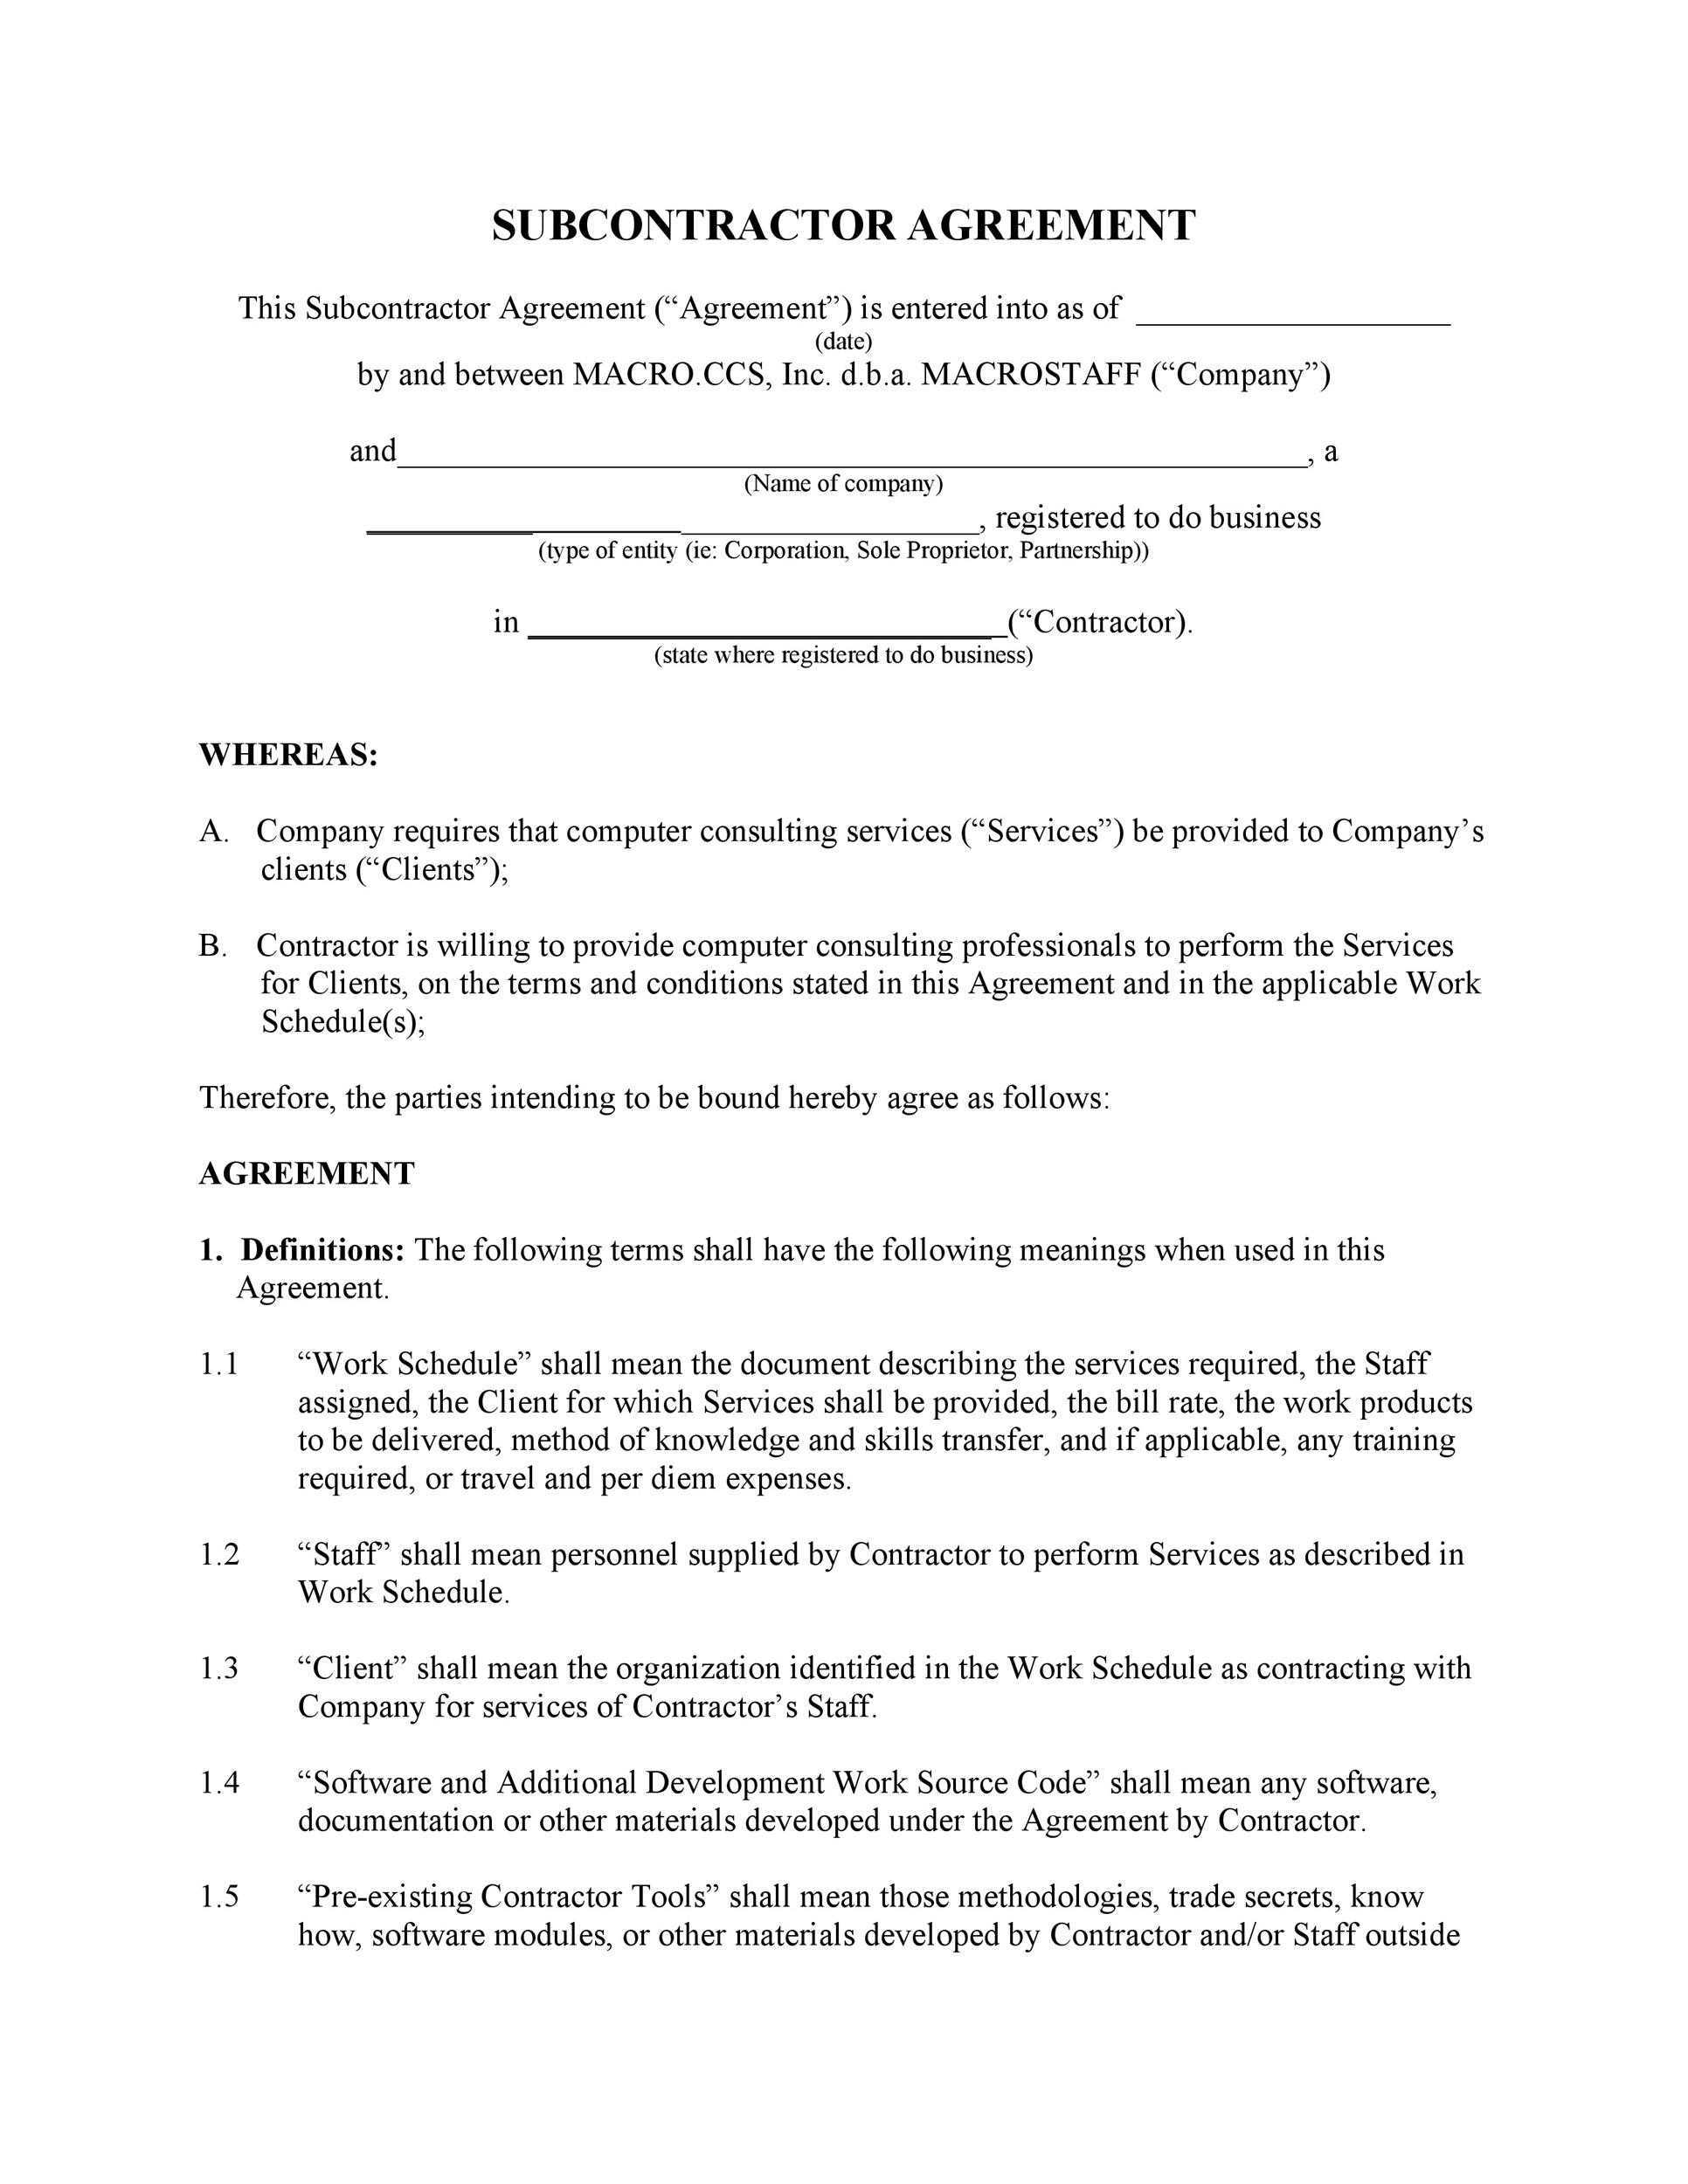 Subcontractor Agreement 03